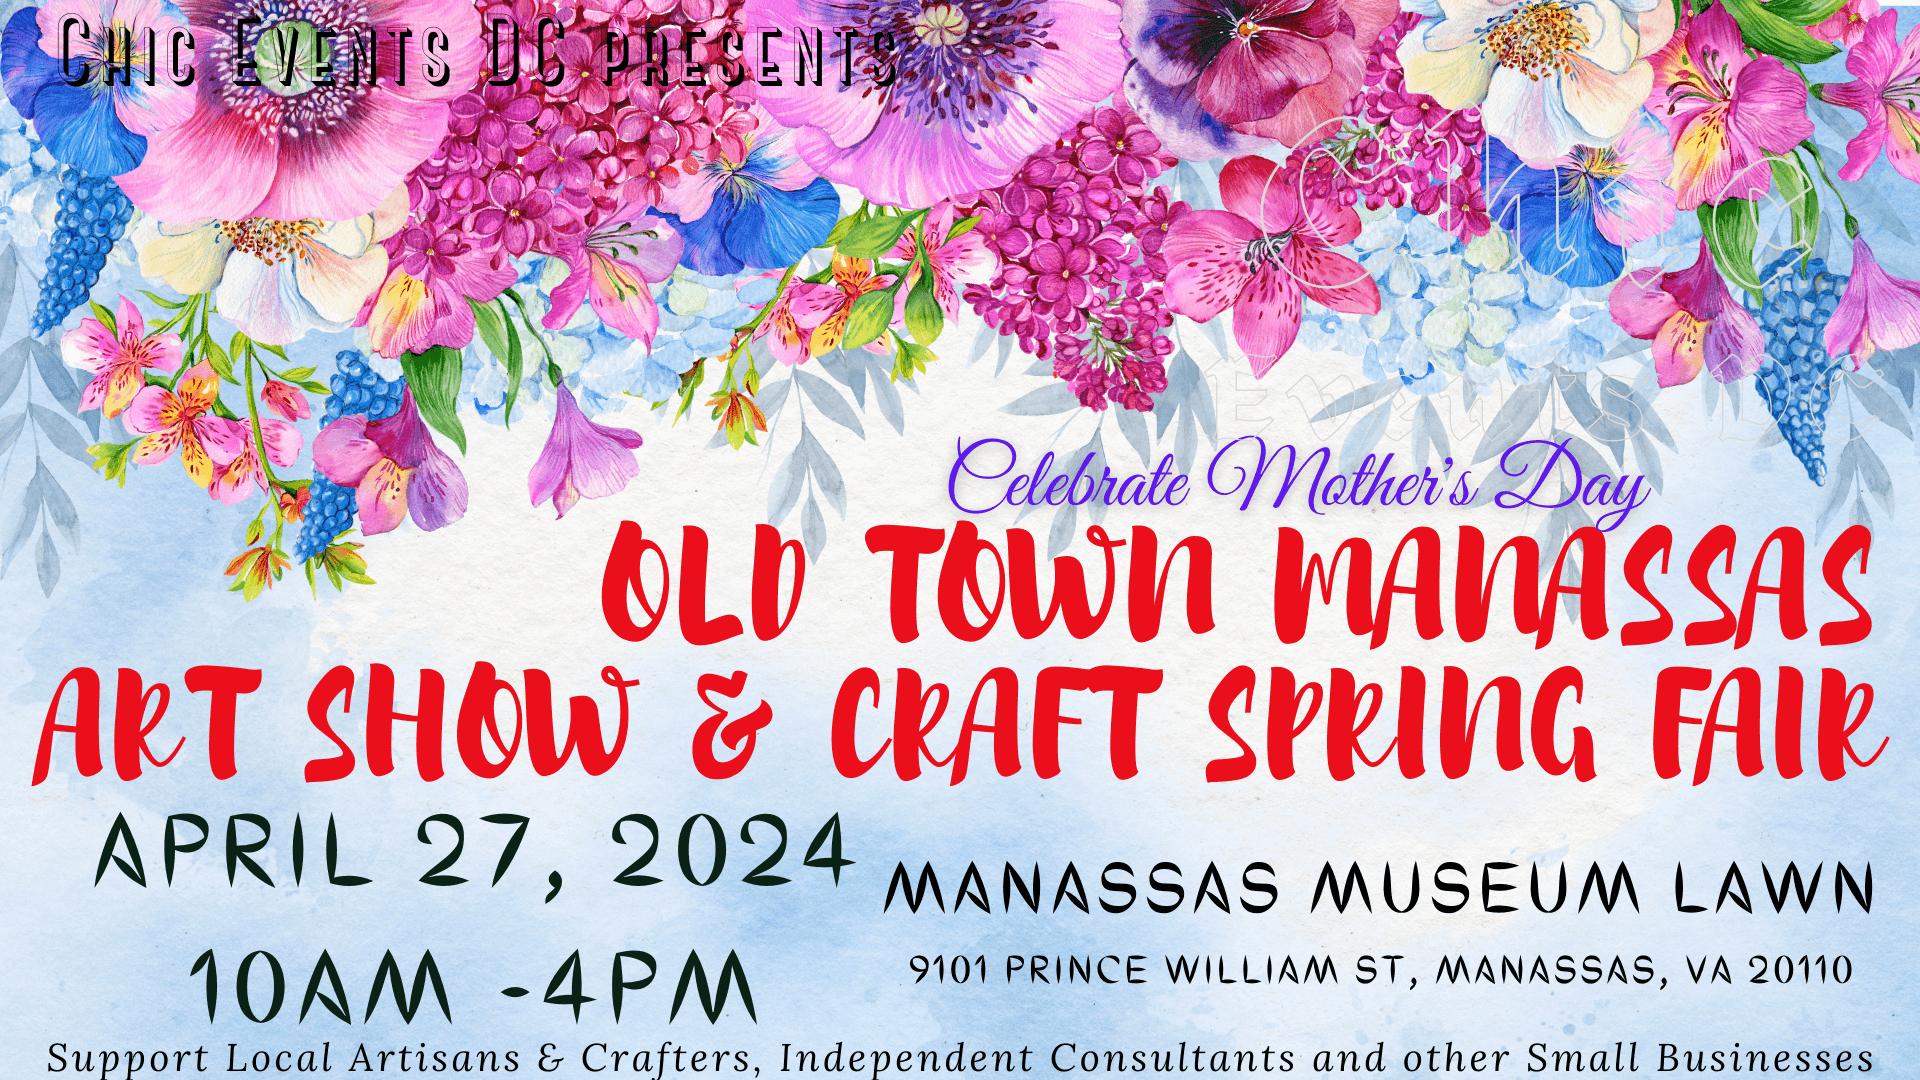 Old Town Manassas Art Show & Craft Spring Fair ~ Mother's Day Celebration @ Manassas Museum, Manassas City, Virginia, United States